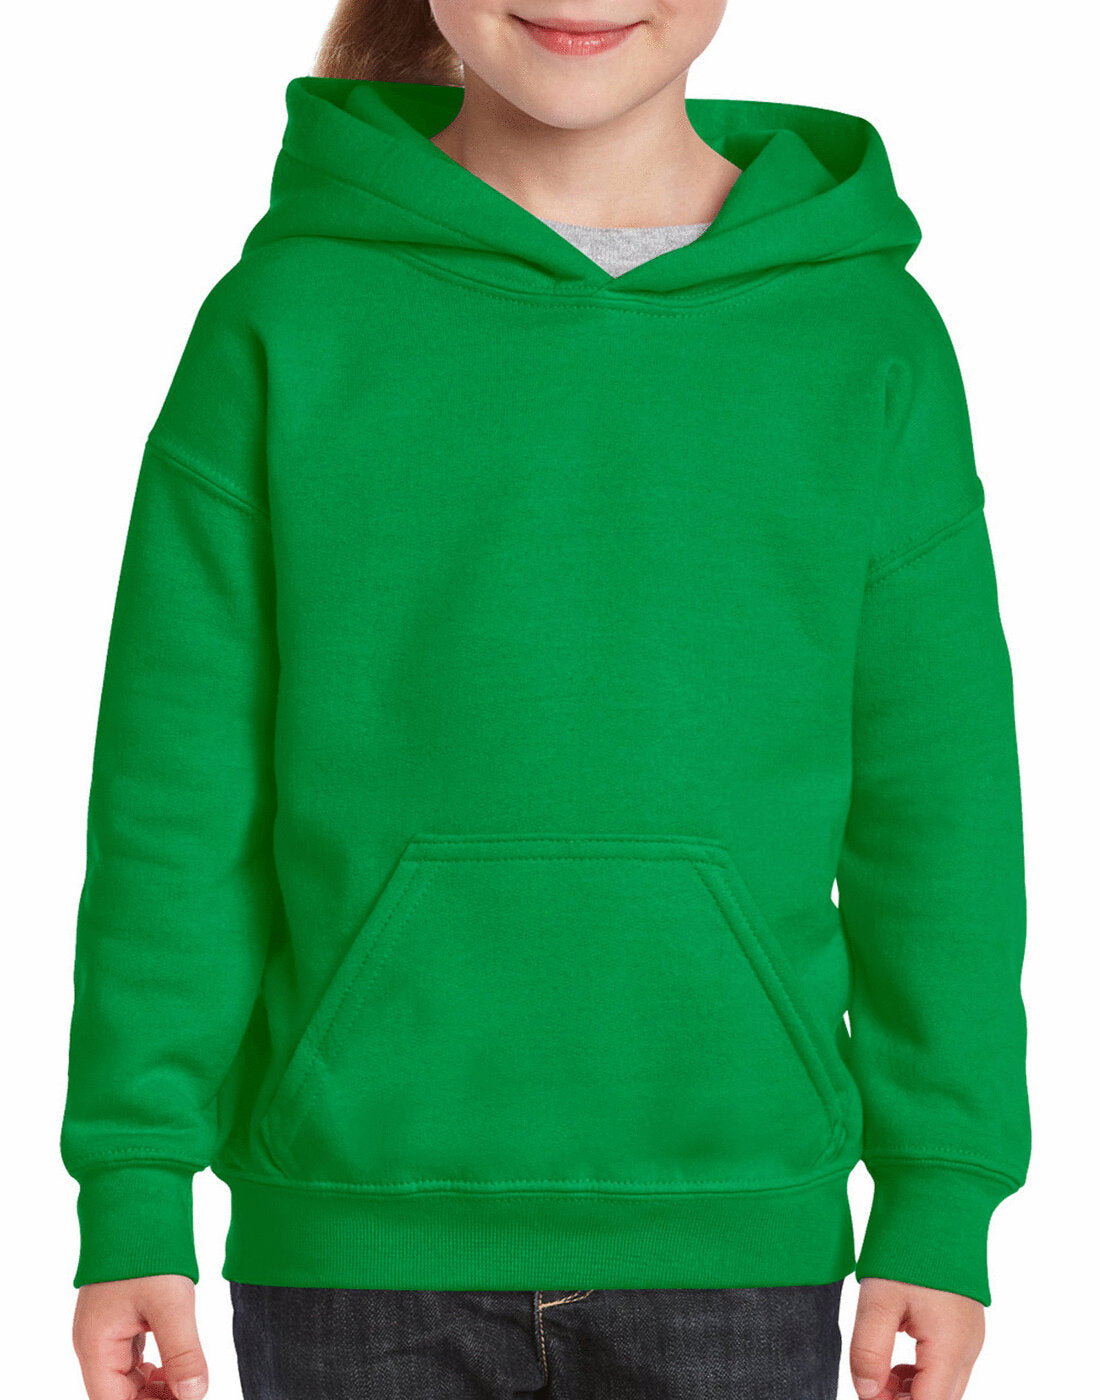 Gildan Kids Heavy Blend Hooded Sweatshirt - Irish Green